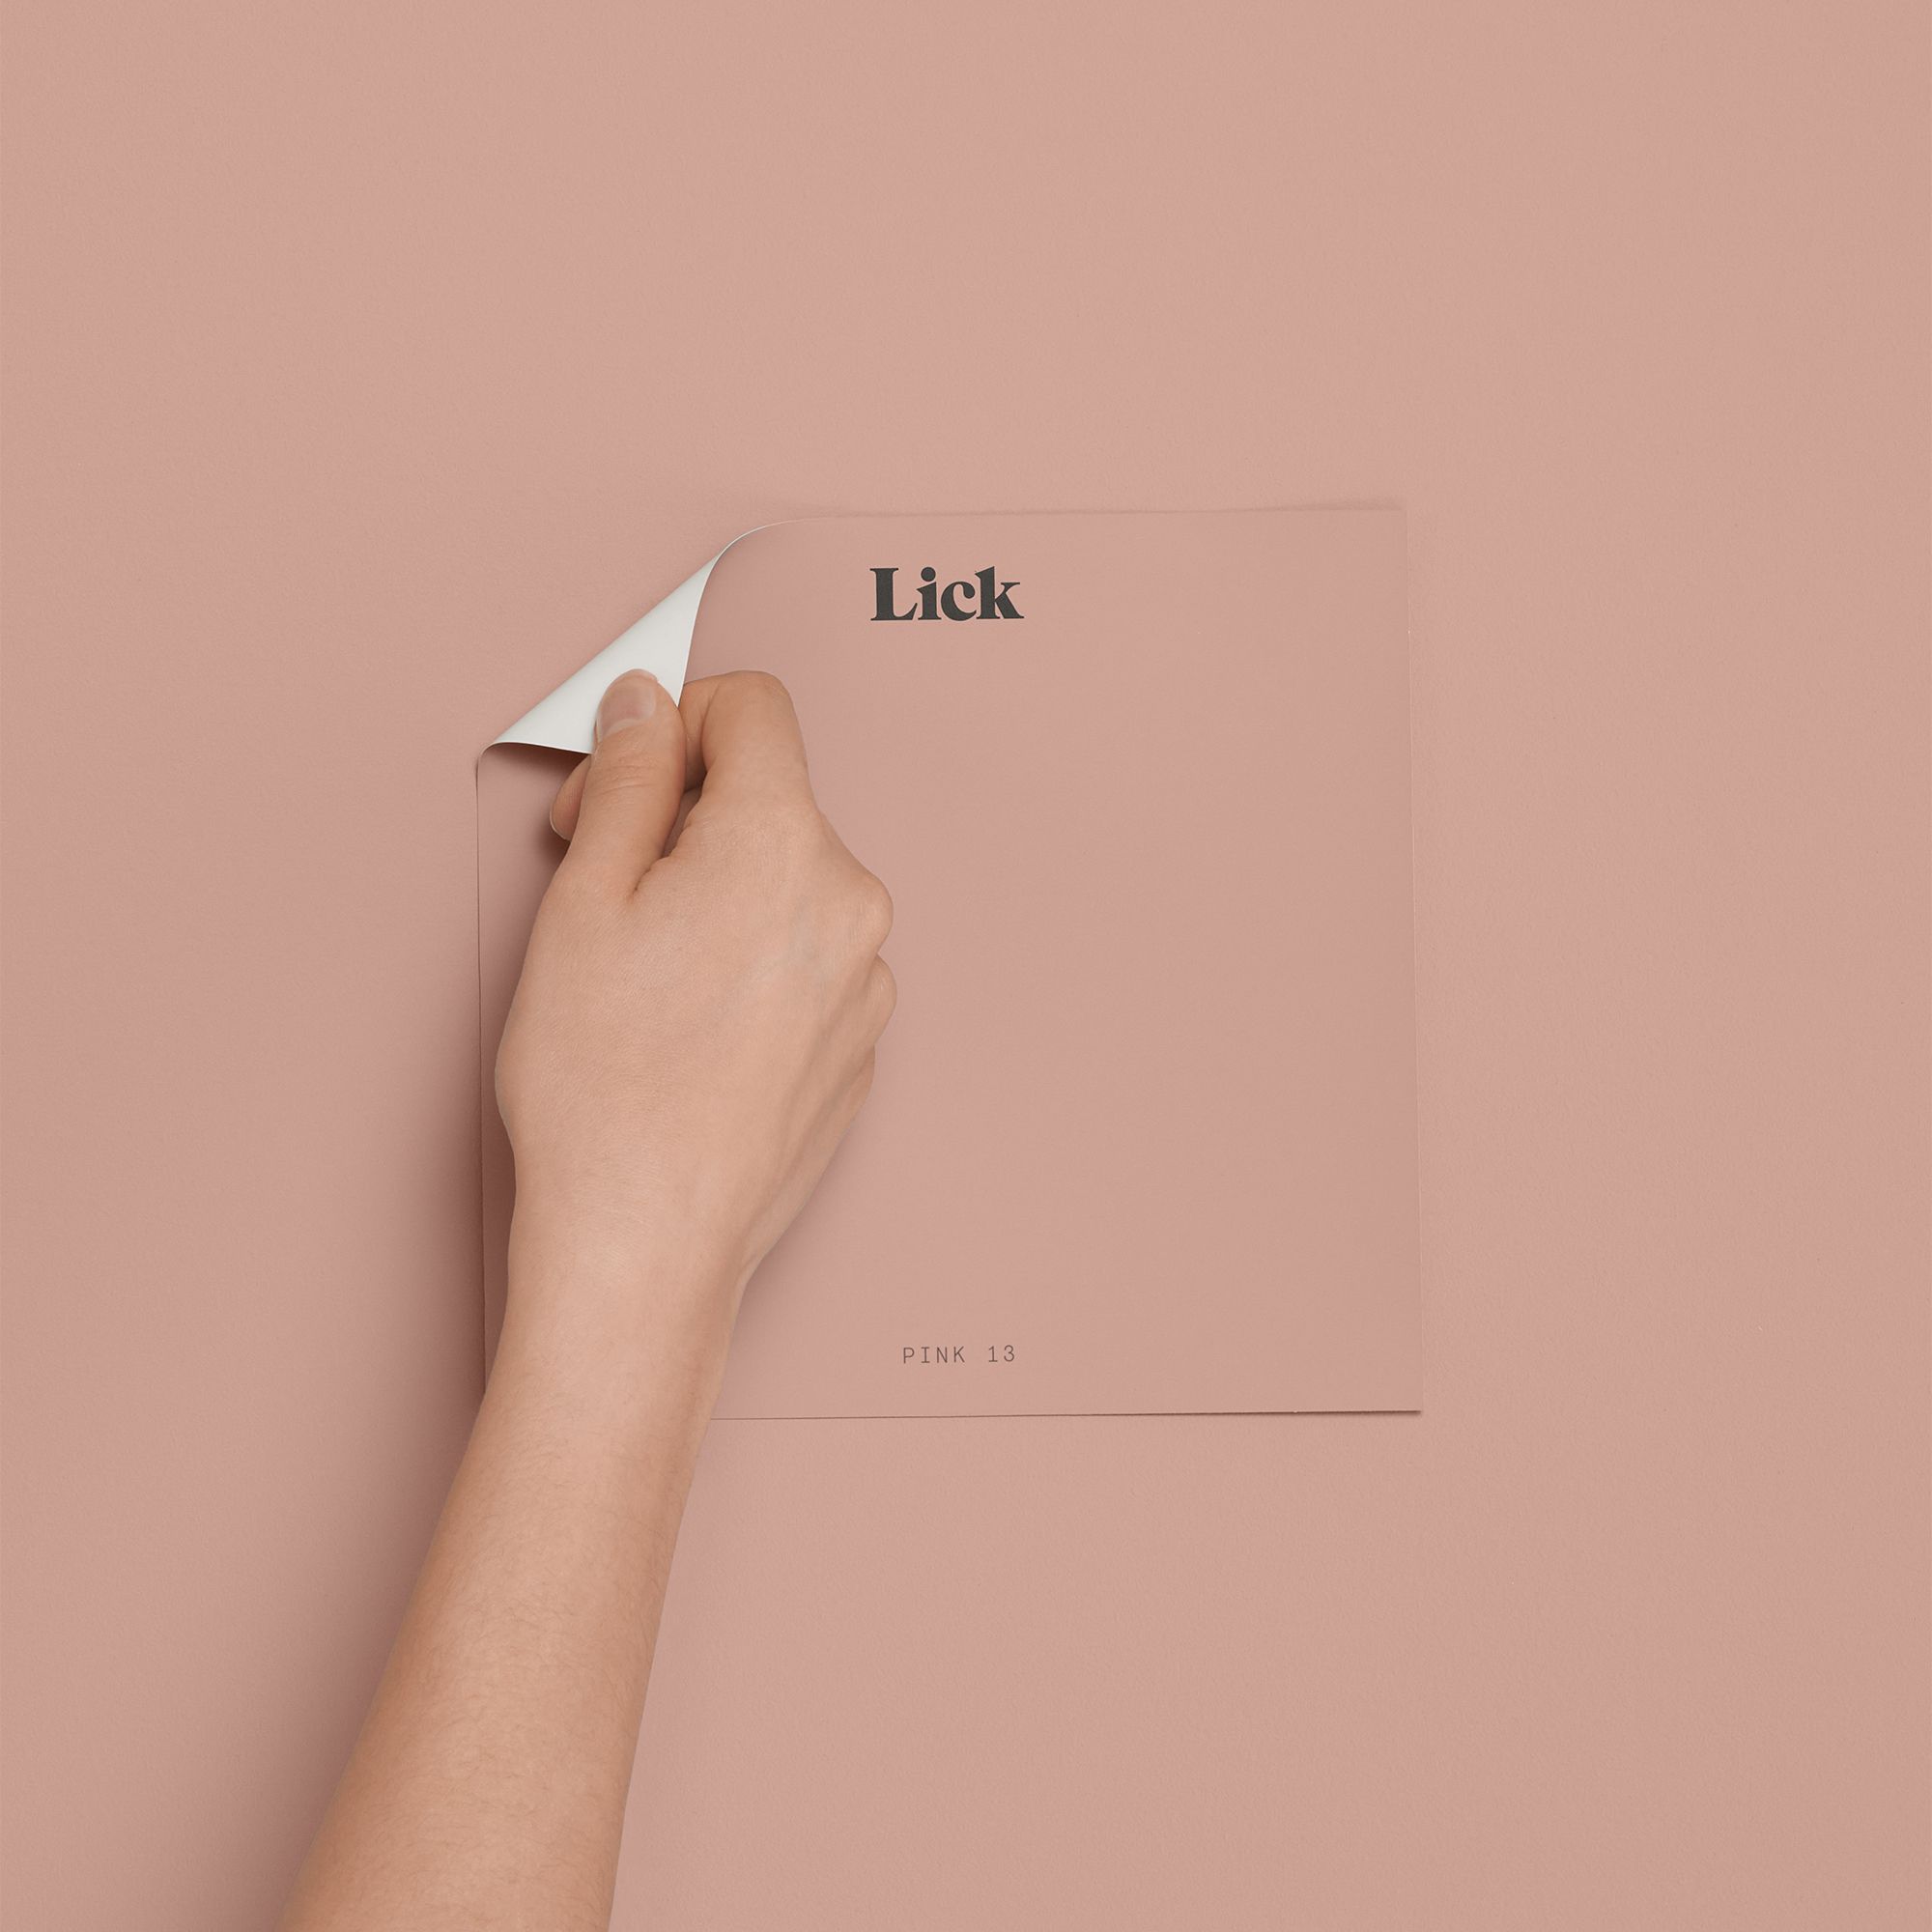 Lick Pink 13 Peel & stick Tester